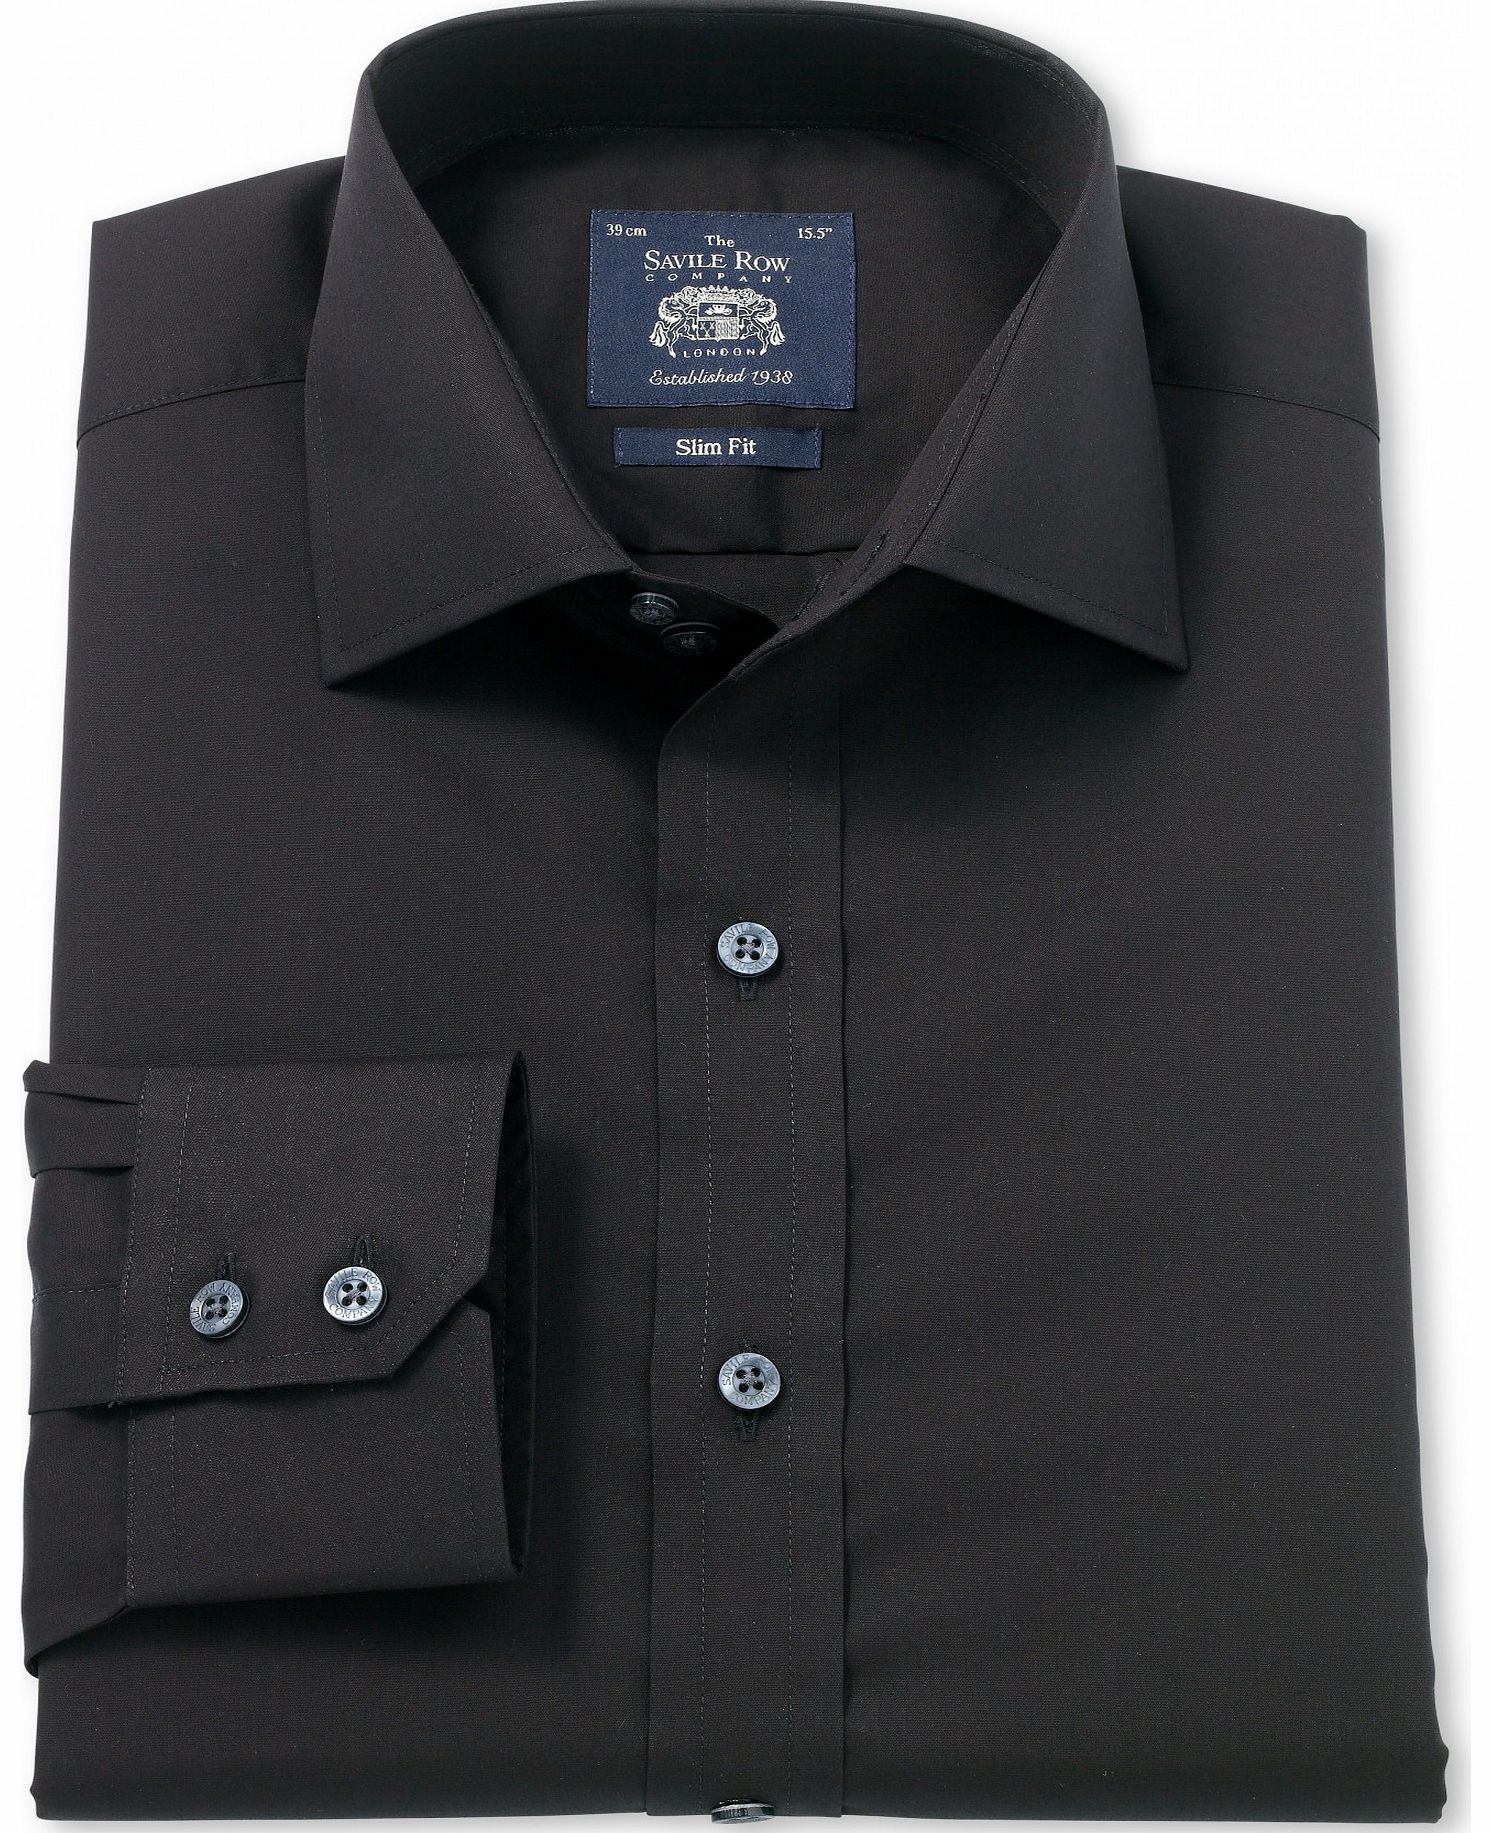 Savile Row Company Black Poplin Slim Fit Shirt 15 1/2`` Single